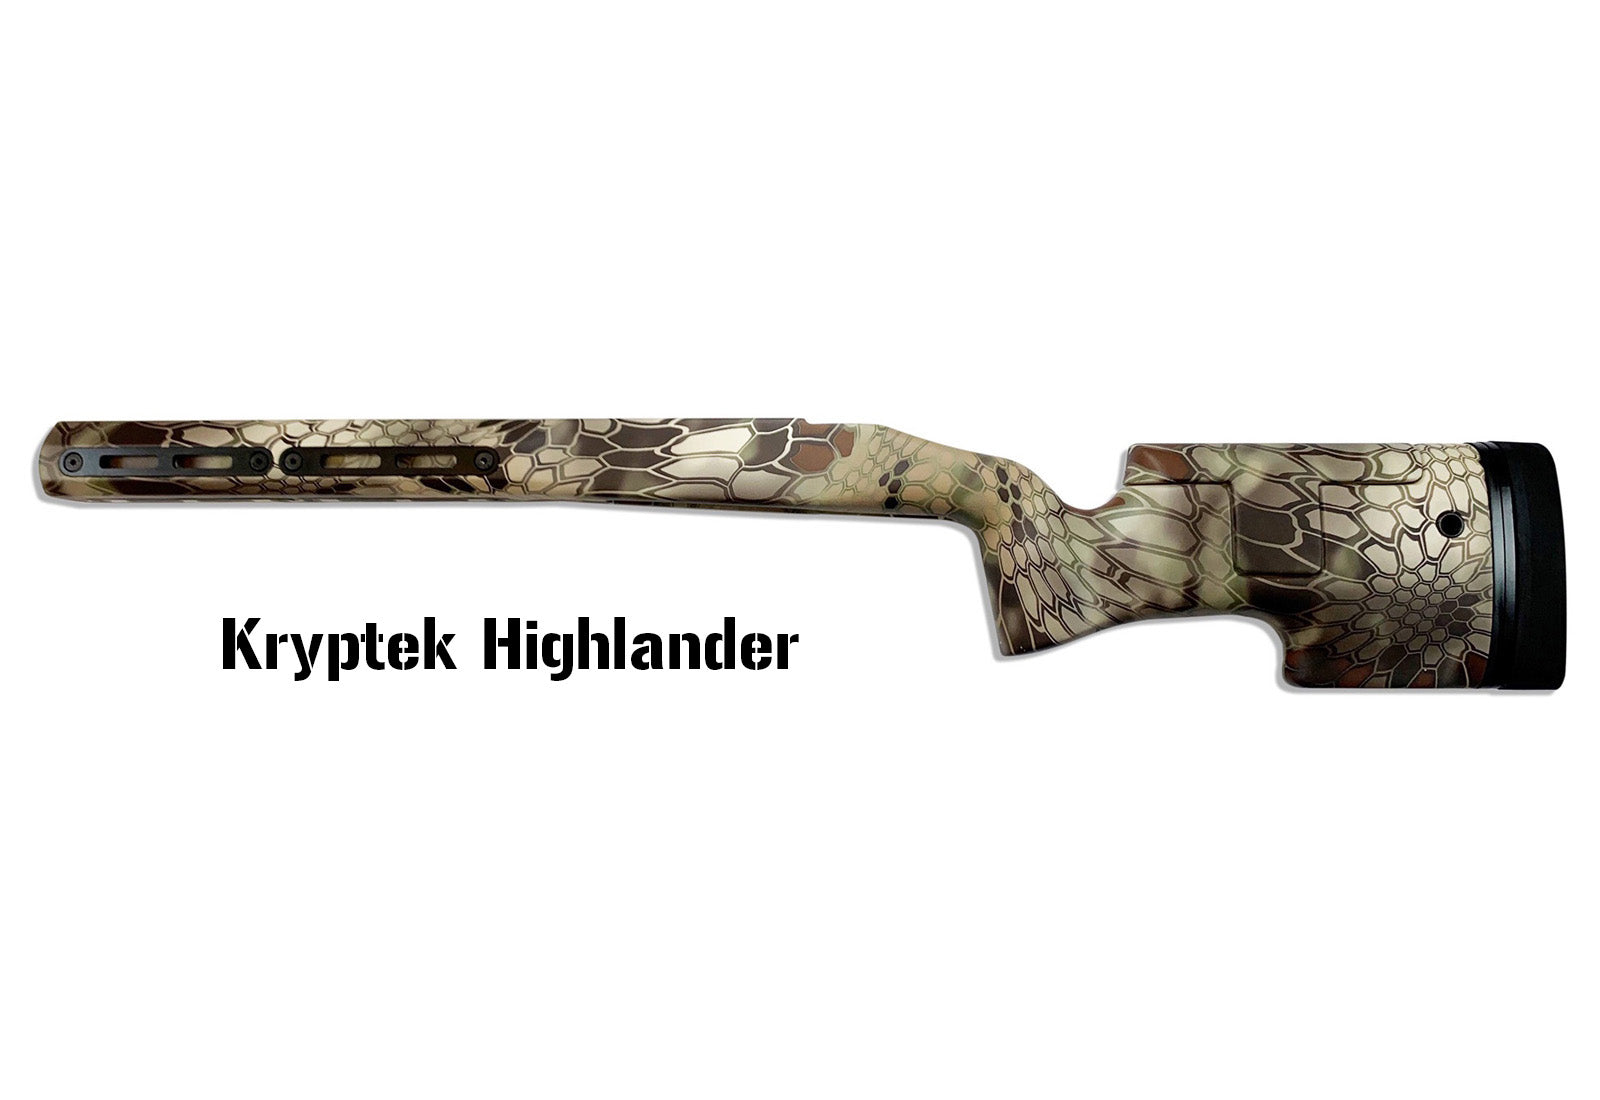 Ridgeback - Right Hand Rem 700 or 700 clone Long Action, BDL, Sendero barrel.  Kryptek Highlander Camo.